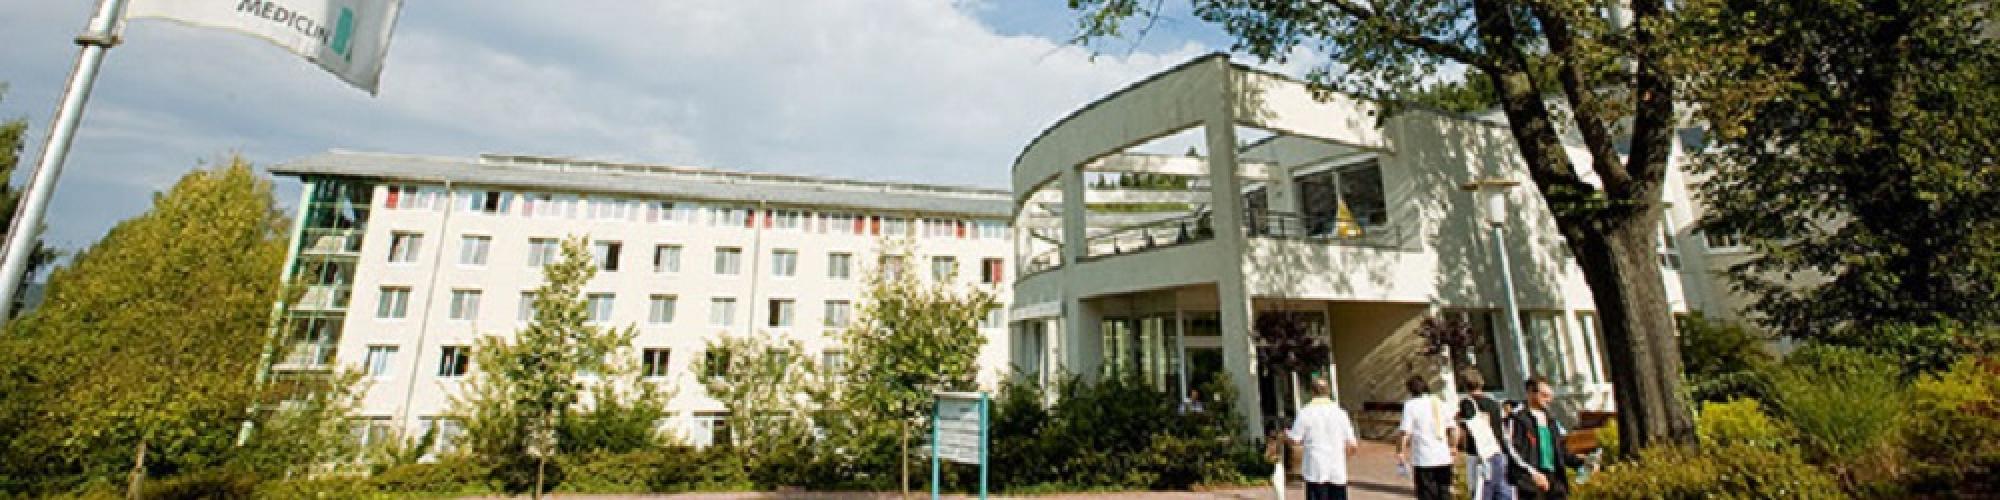 MEDICLIN Klinik am Brunnenberg